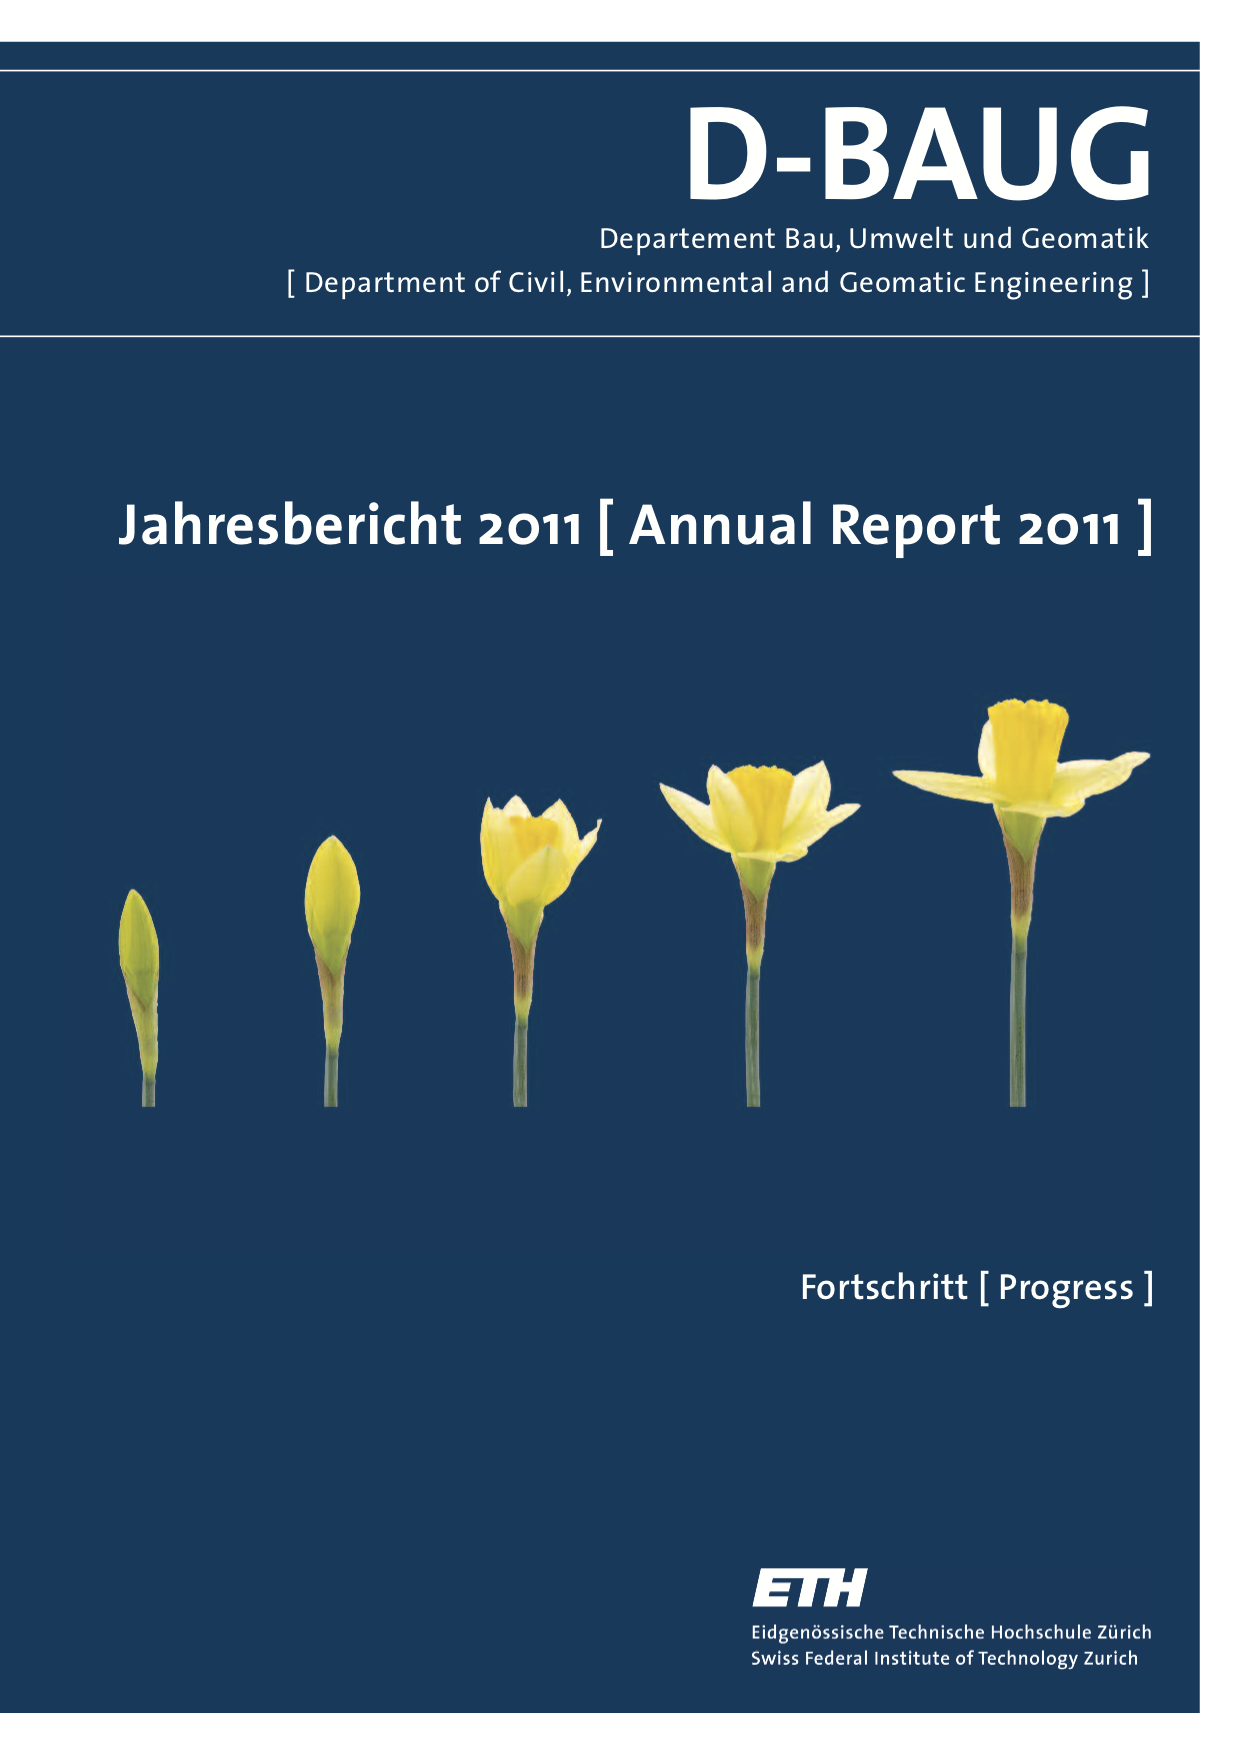 D-BAUG Annual report 2011